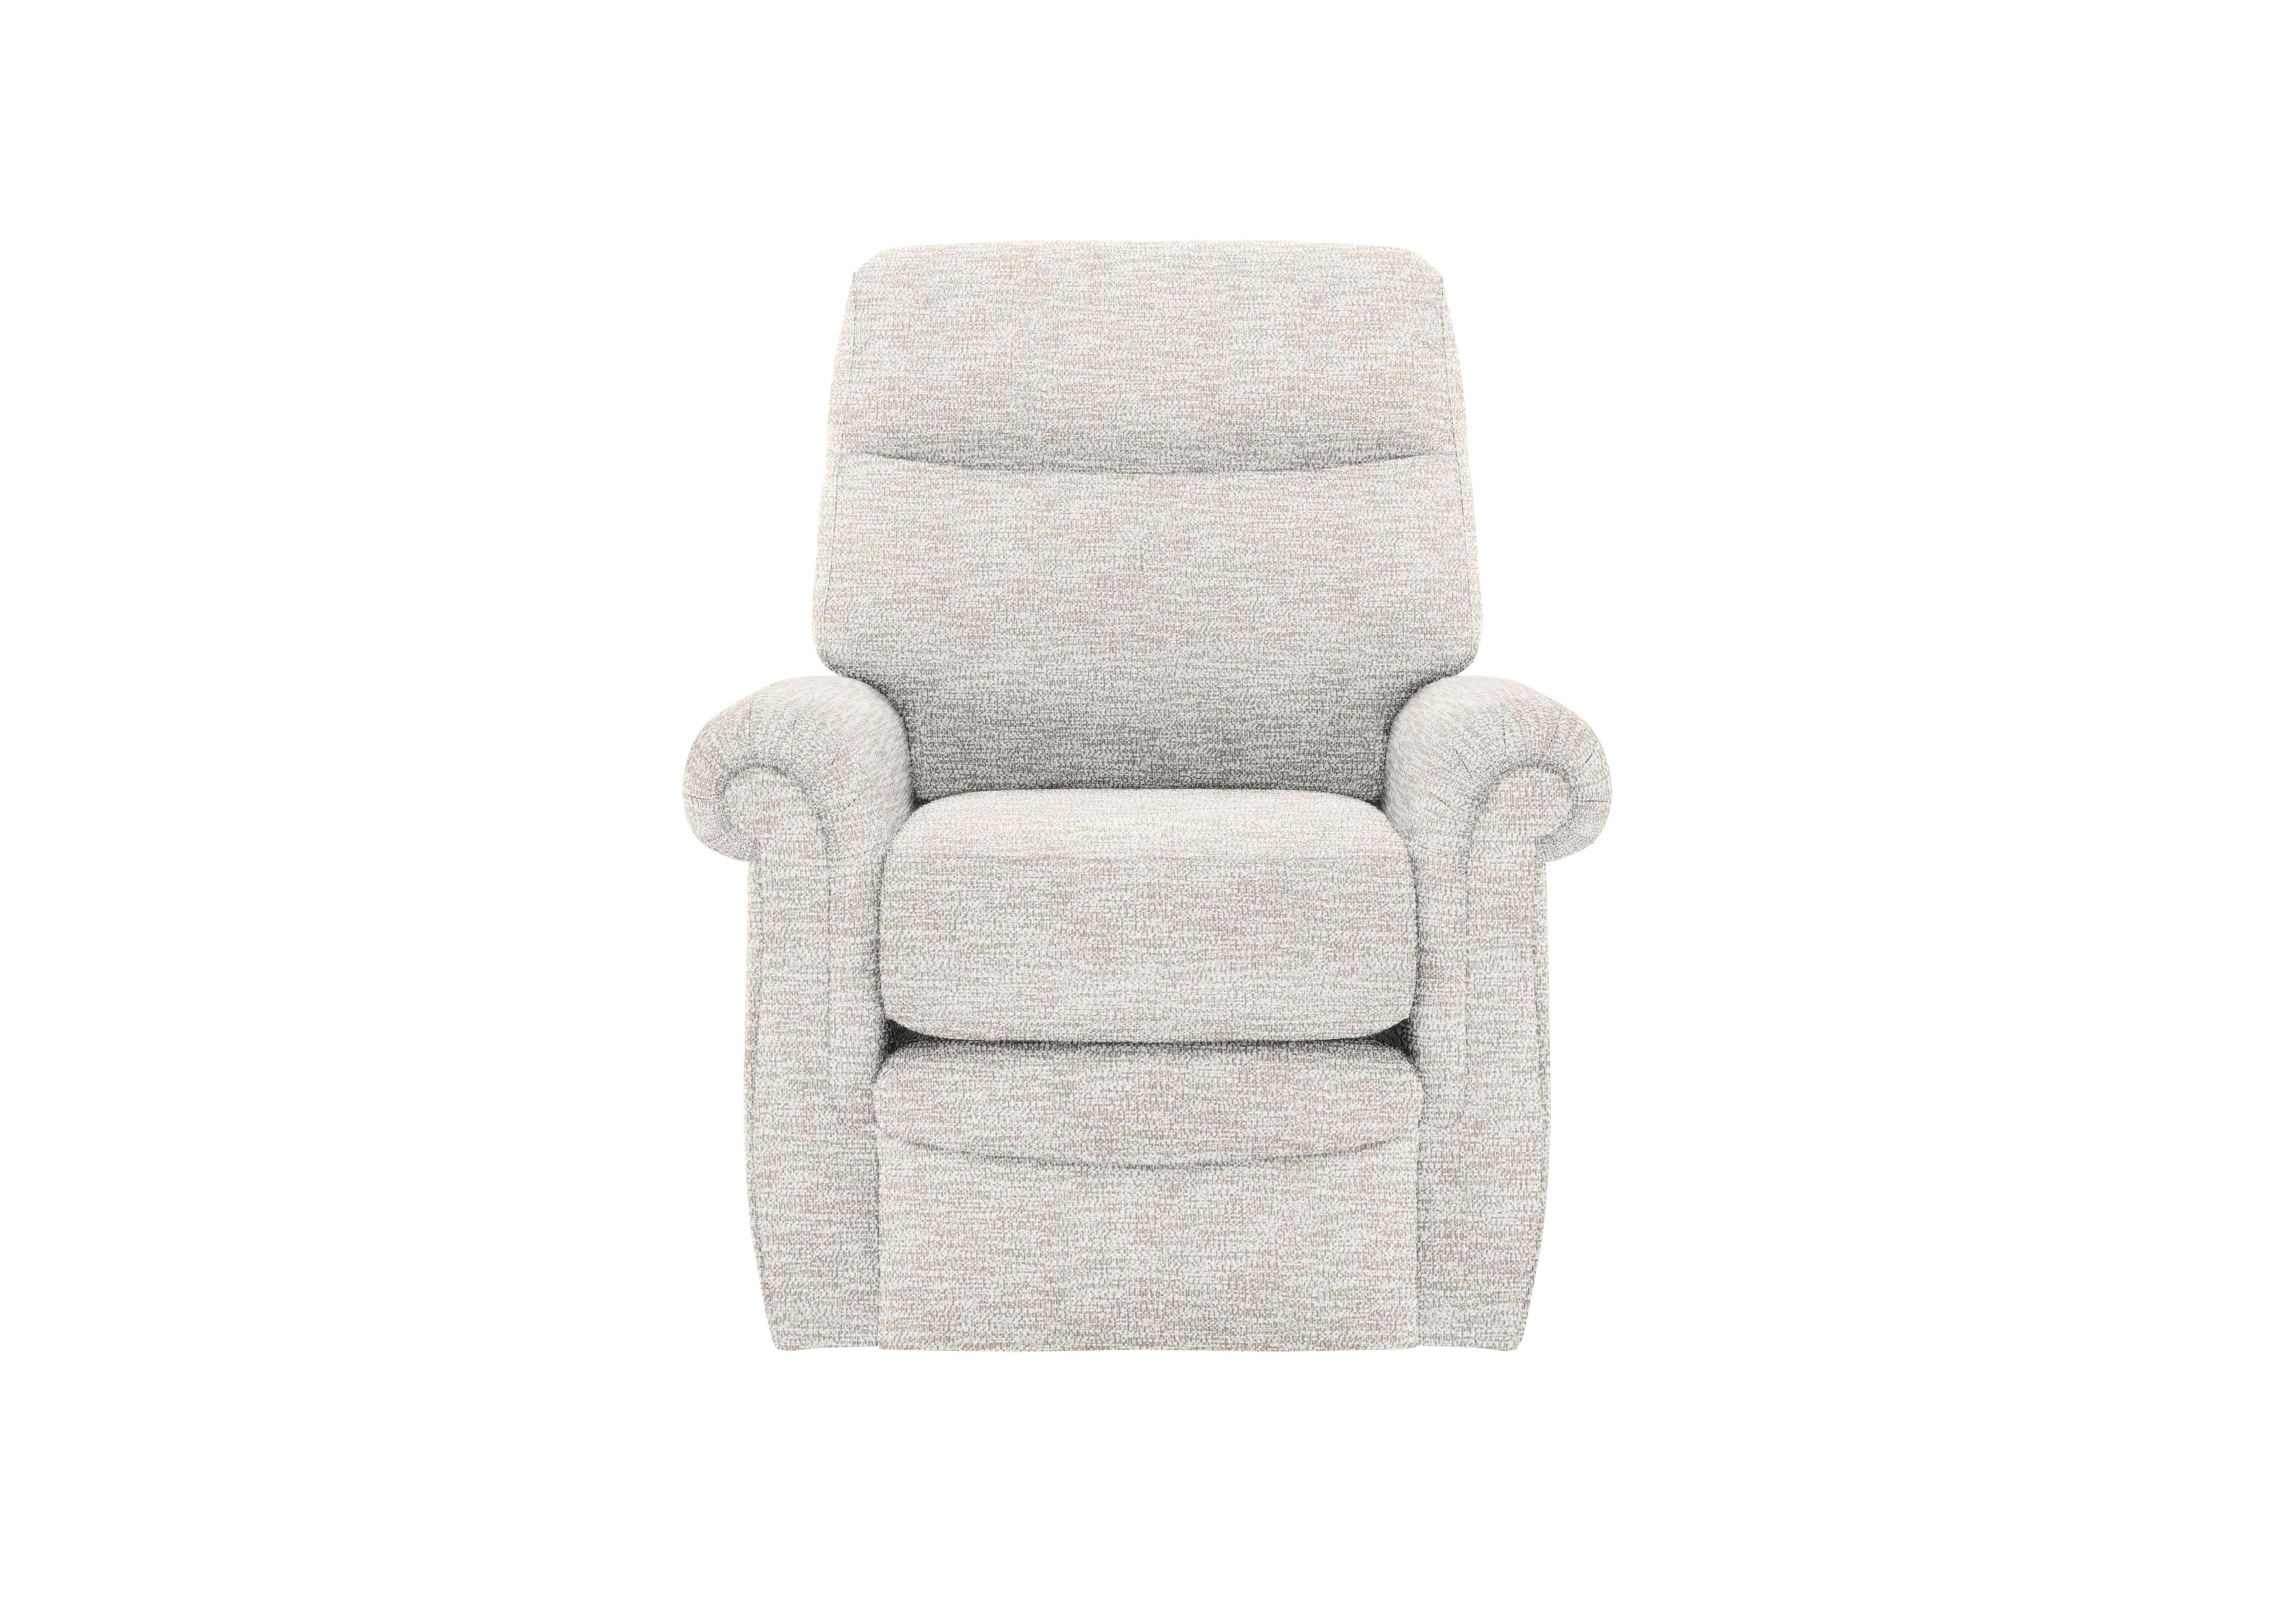 Avon Small Fabric Armchair in C931 Rush Cream on Furniture Village